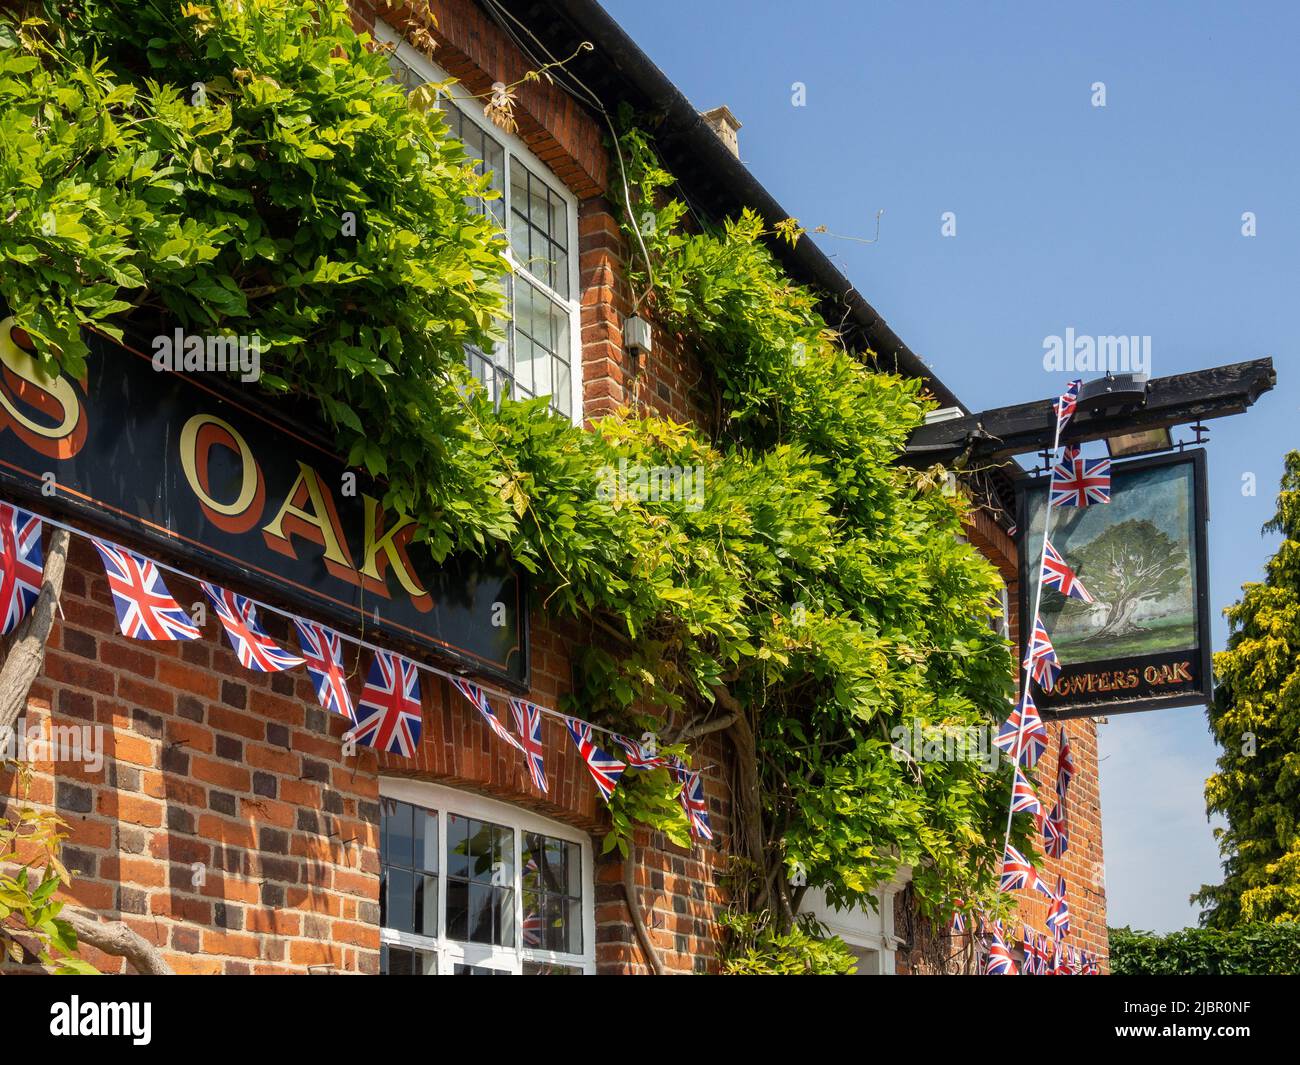 Cowpers Oak, an attractive wisteria clad 17th century pub, in the village of Weston Underwood, Buckinghamshire, UK Stock Photo